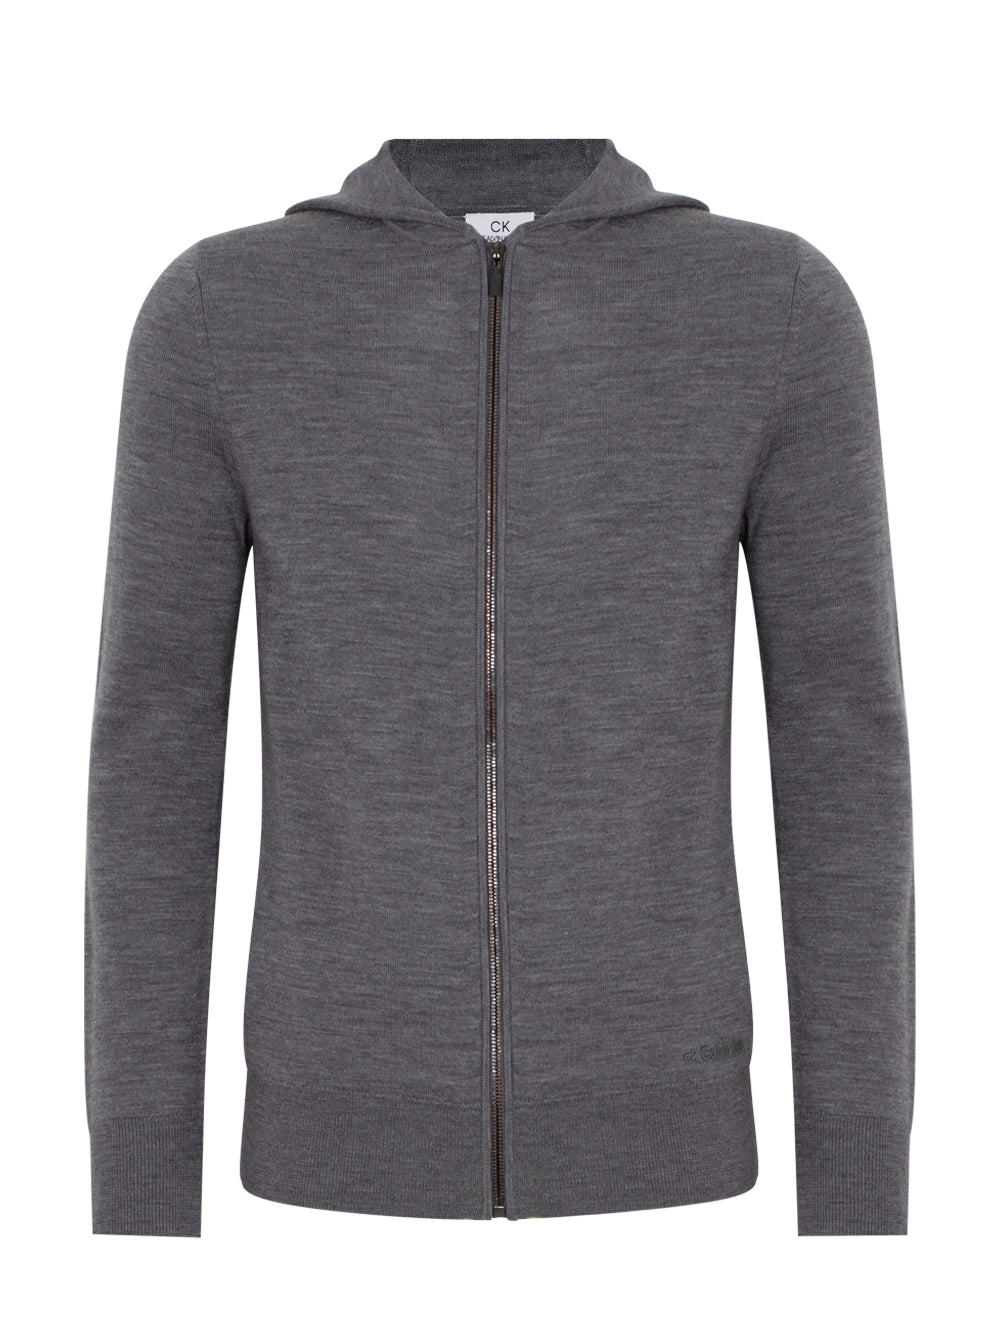 Fine Merino Wool Hooded Zip-Up (Grey)